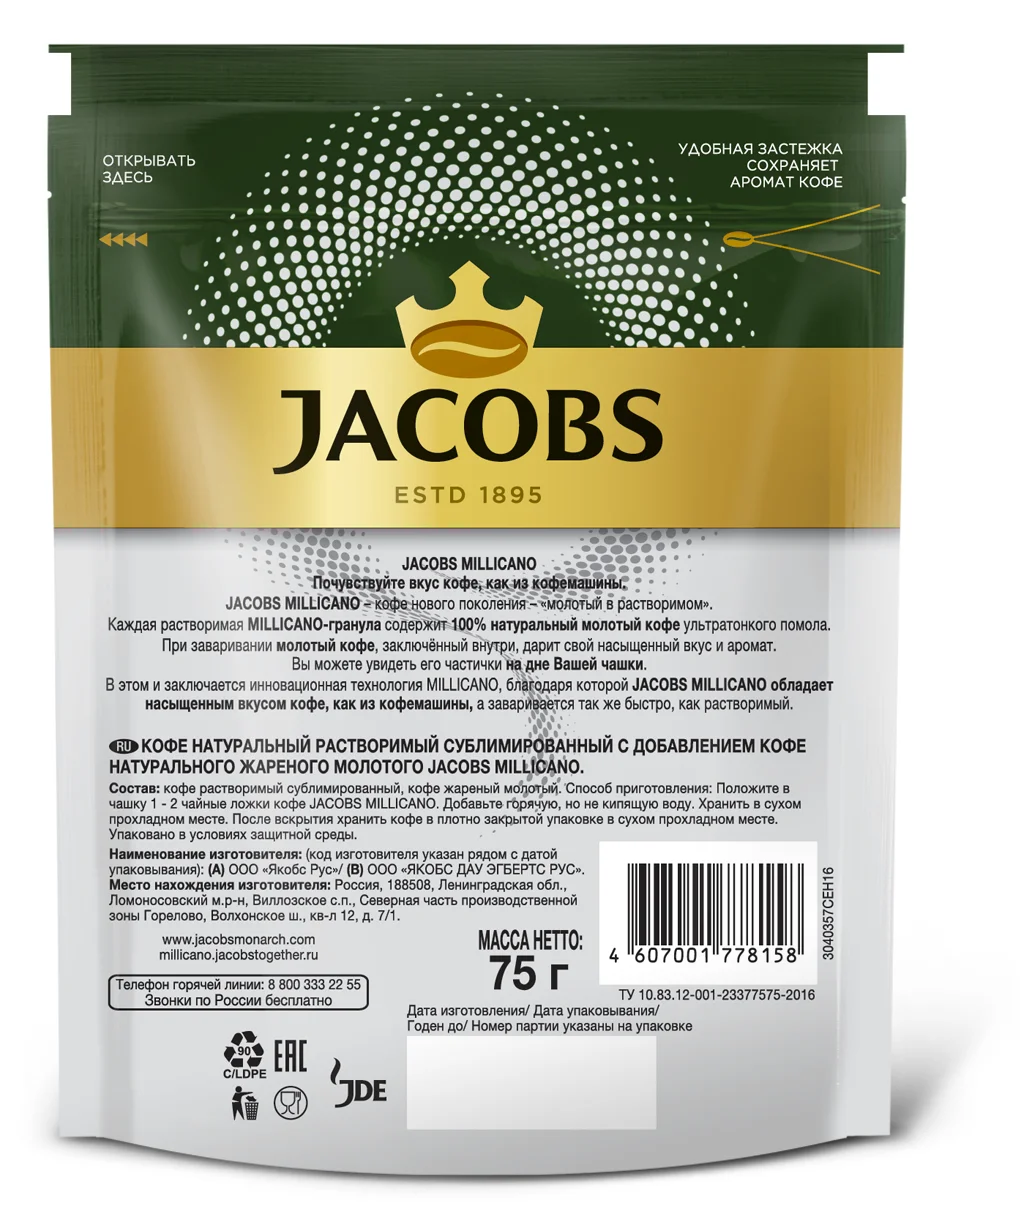 Jacobs "Millicano" - вид зерен: арабика